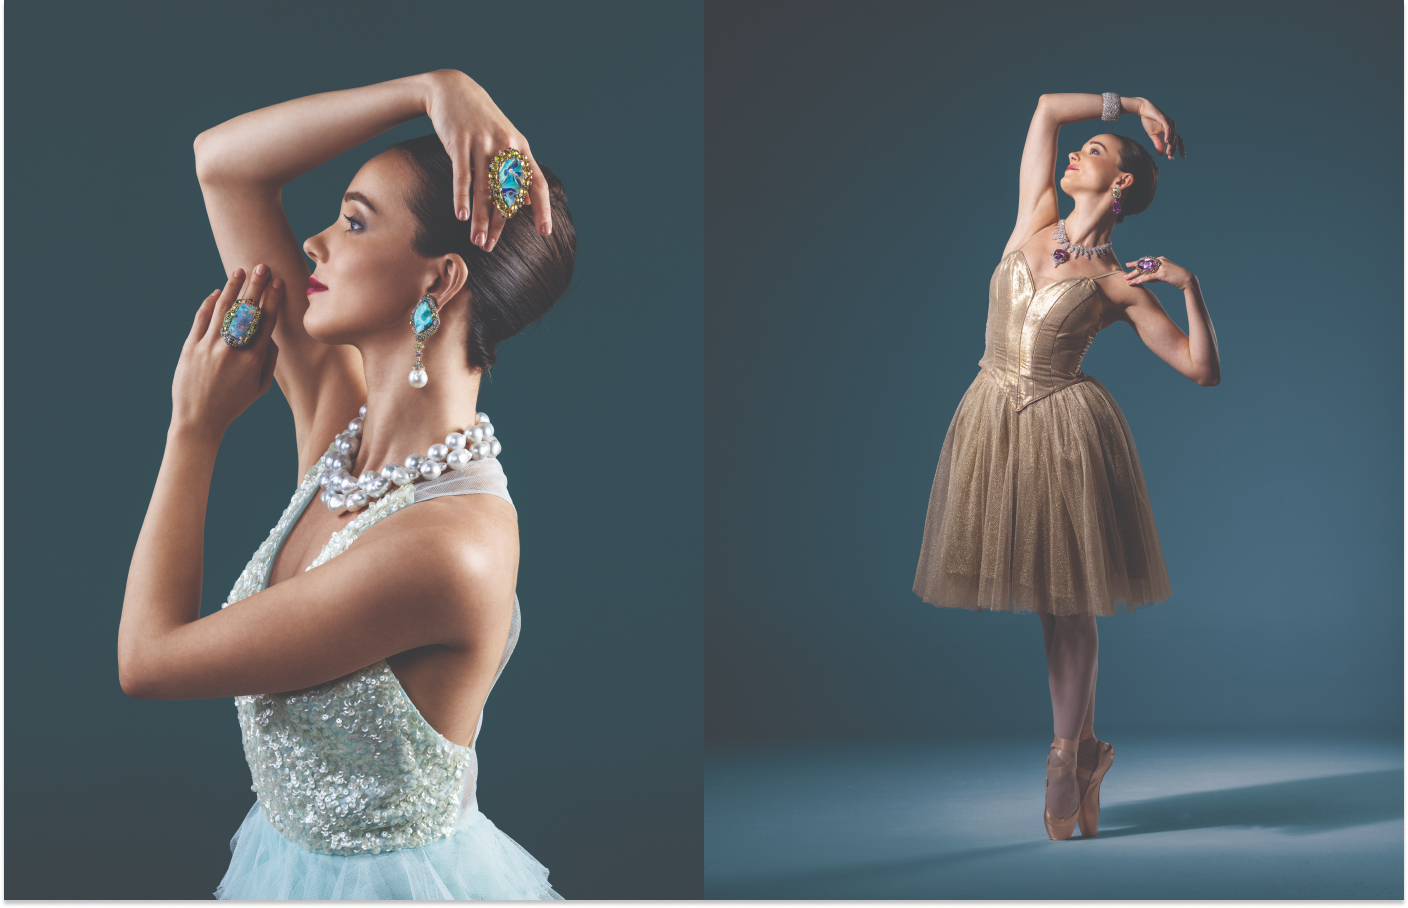 A ballet dancer wears jewellery creations by Margot McKinney